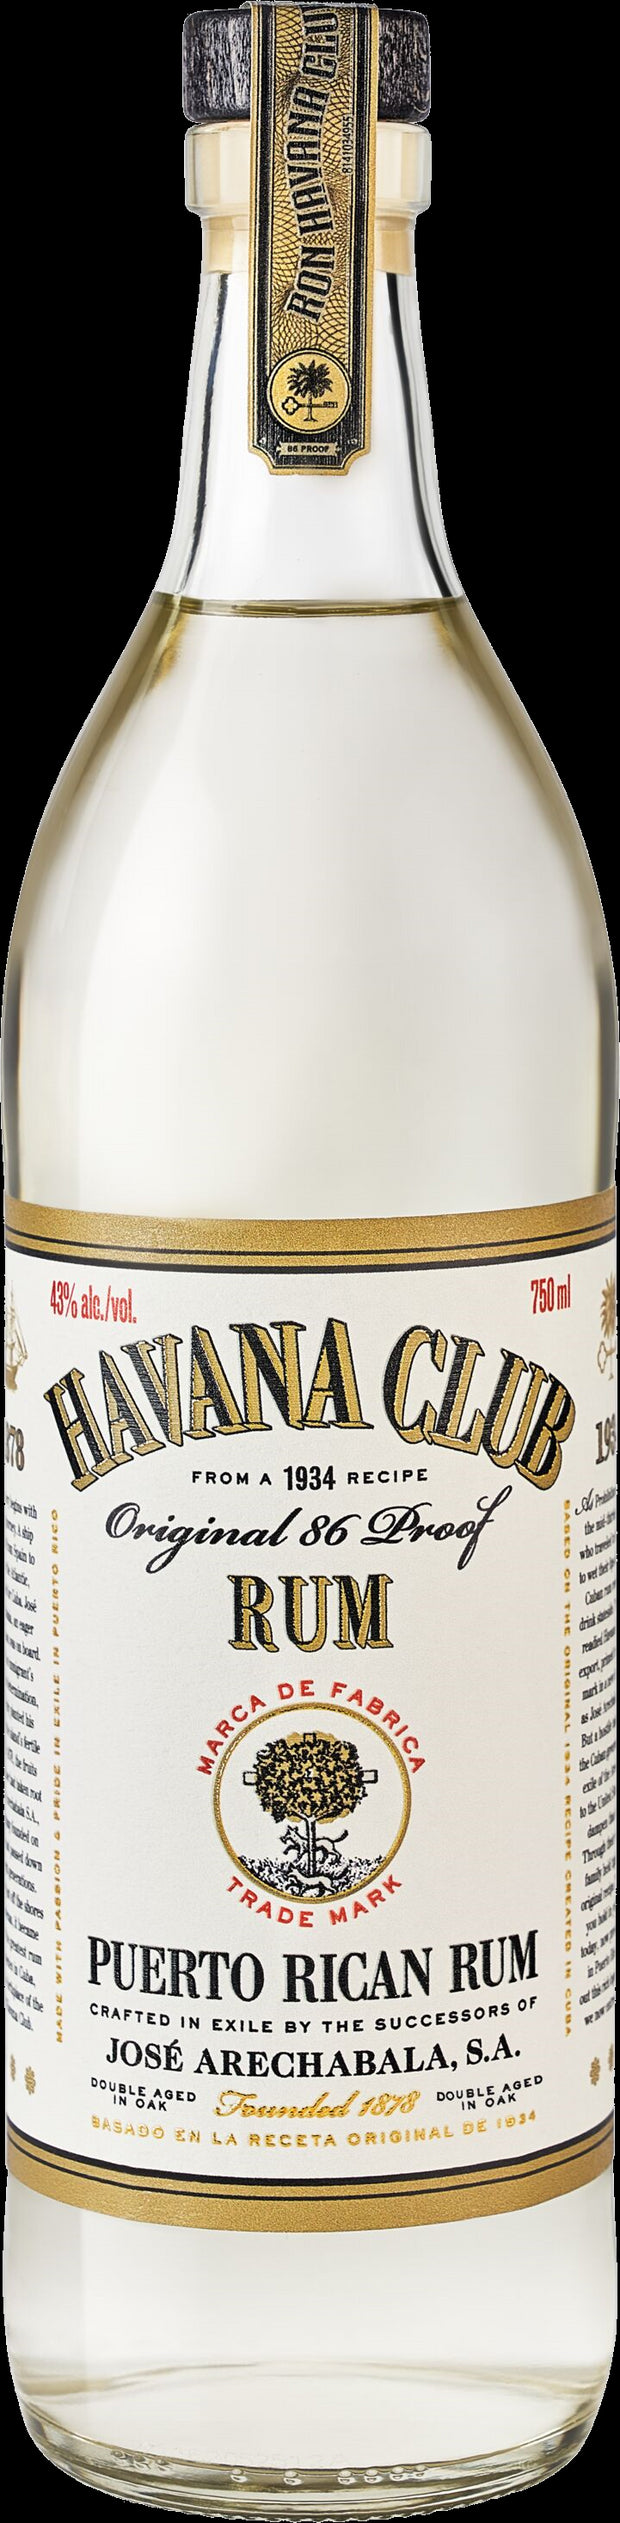 Havana Club Original Puerto Rican Rum 750 ml